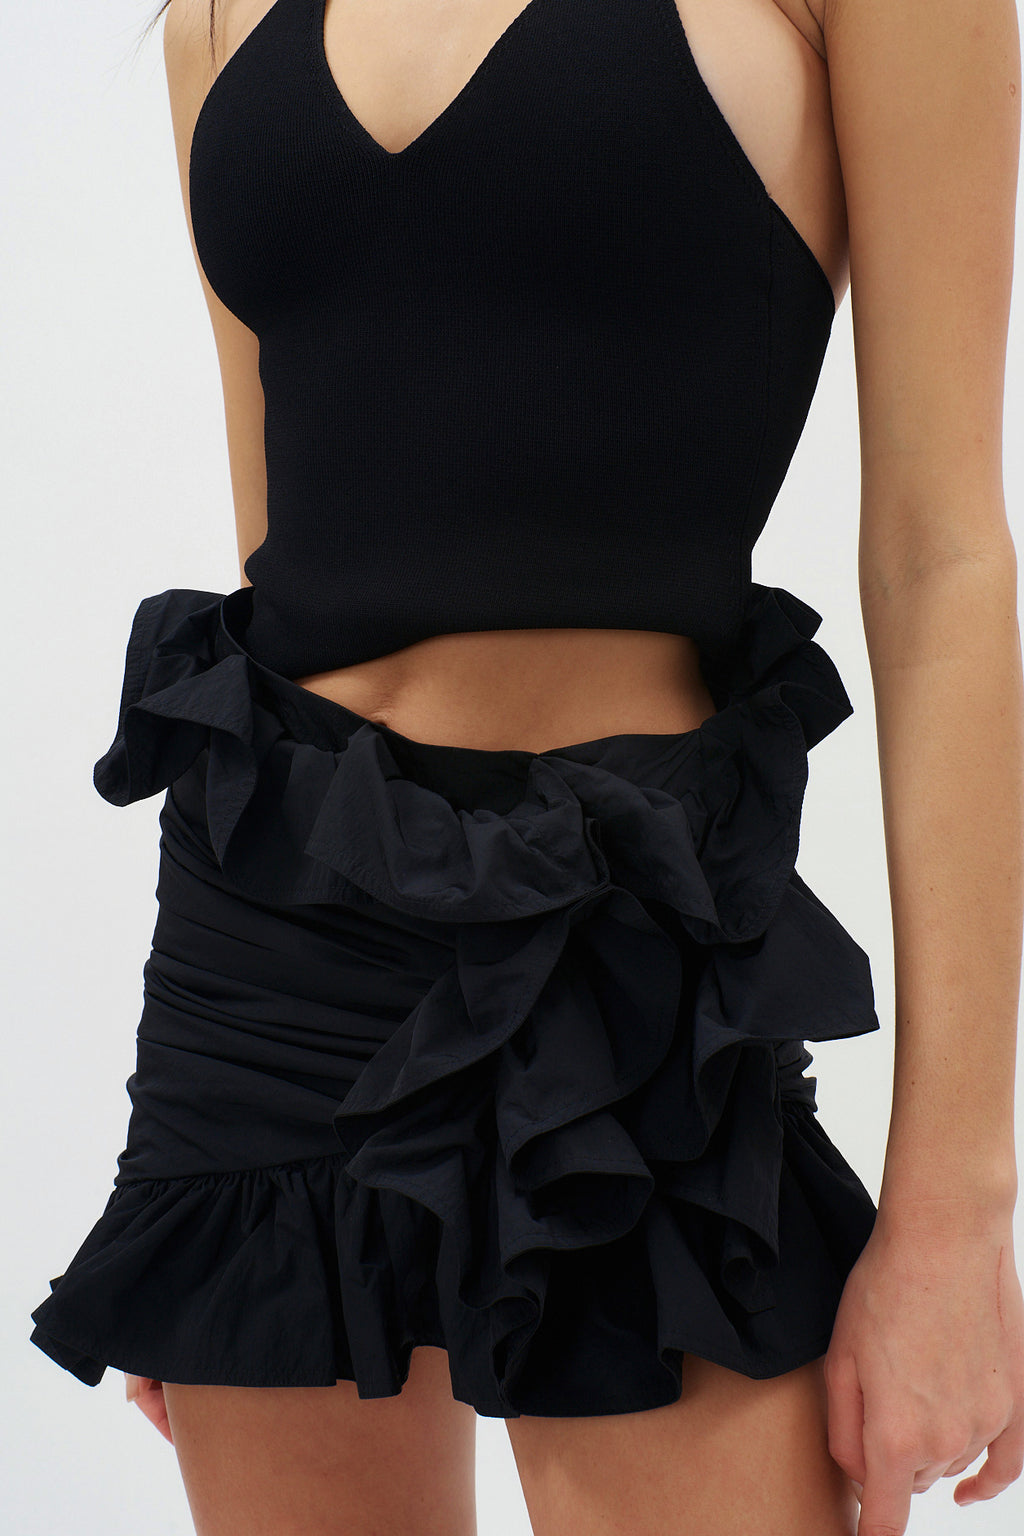 Ruffle Black Mini Skirt